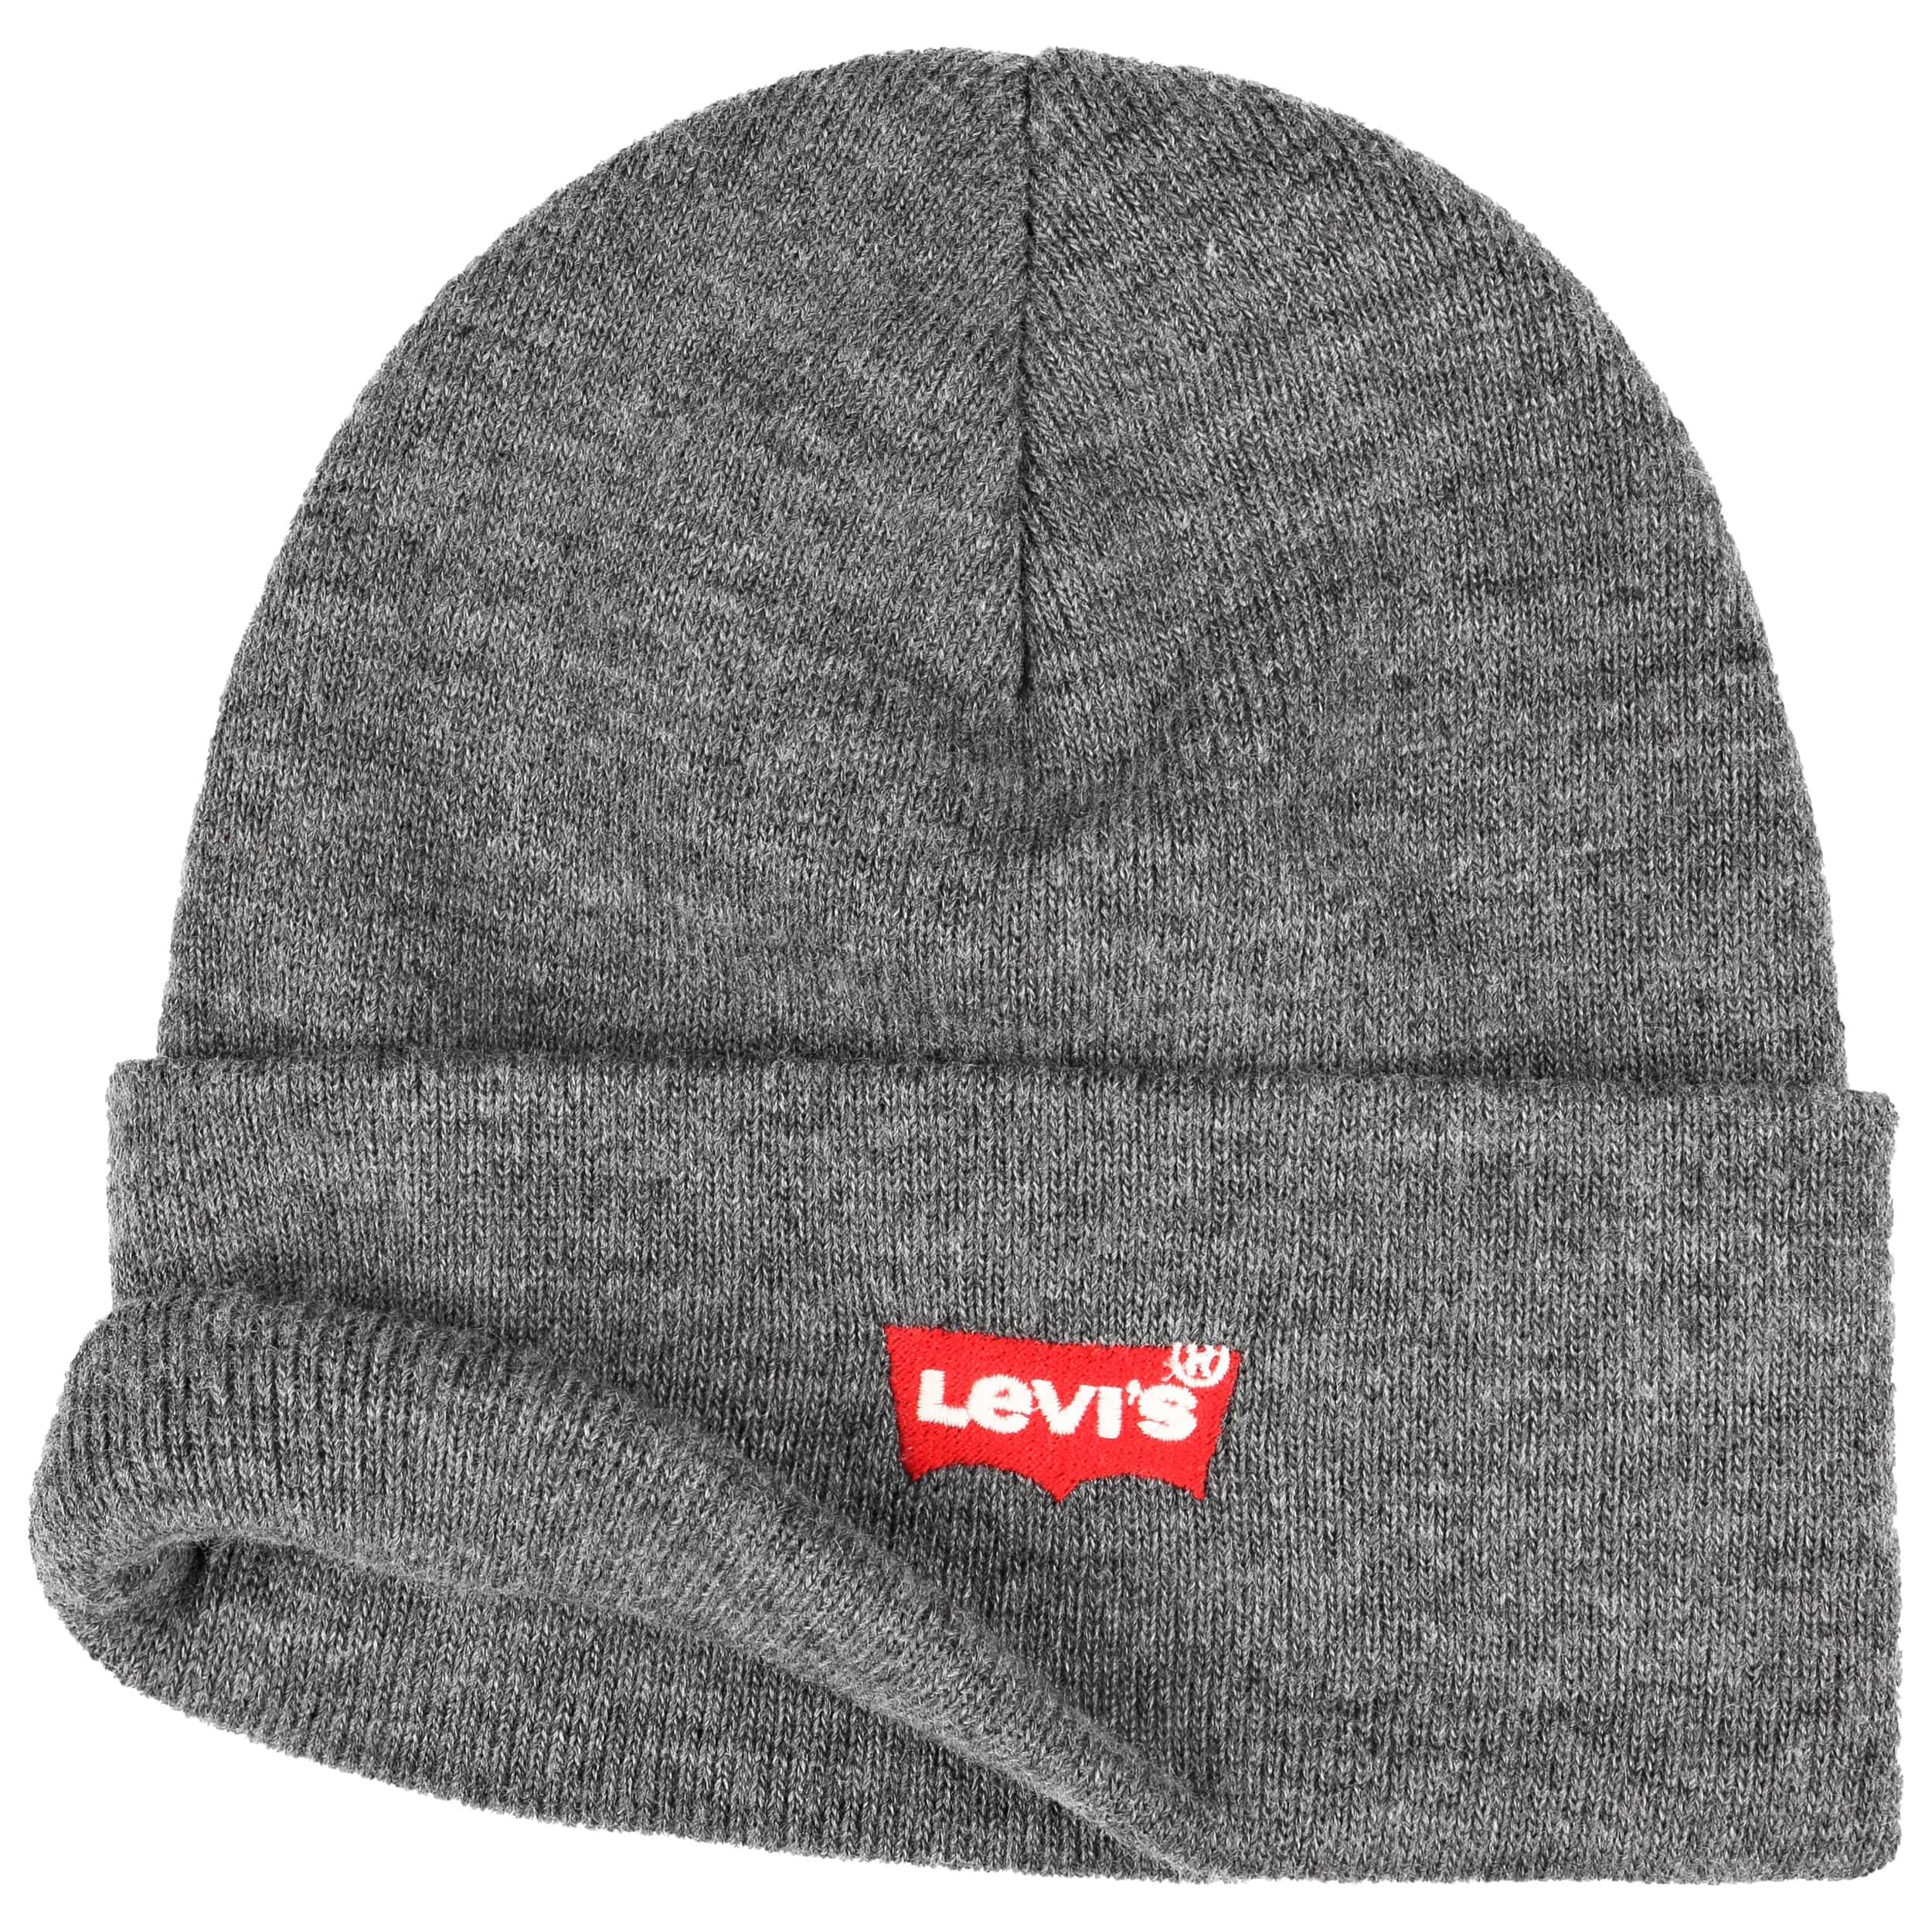 levis wooly hat